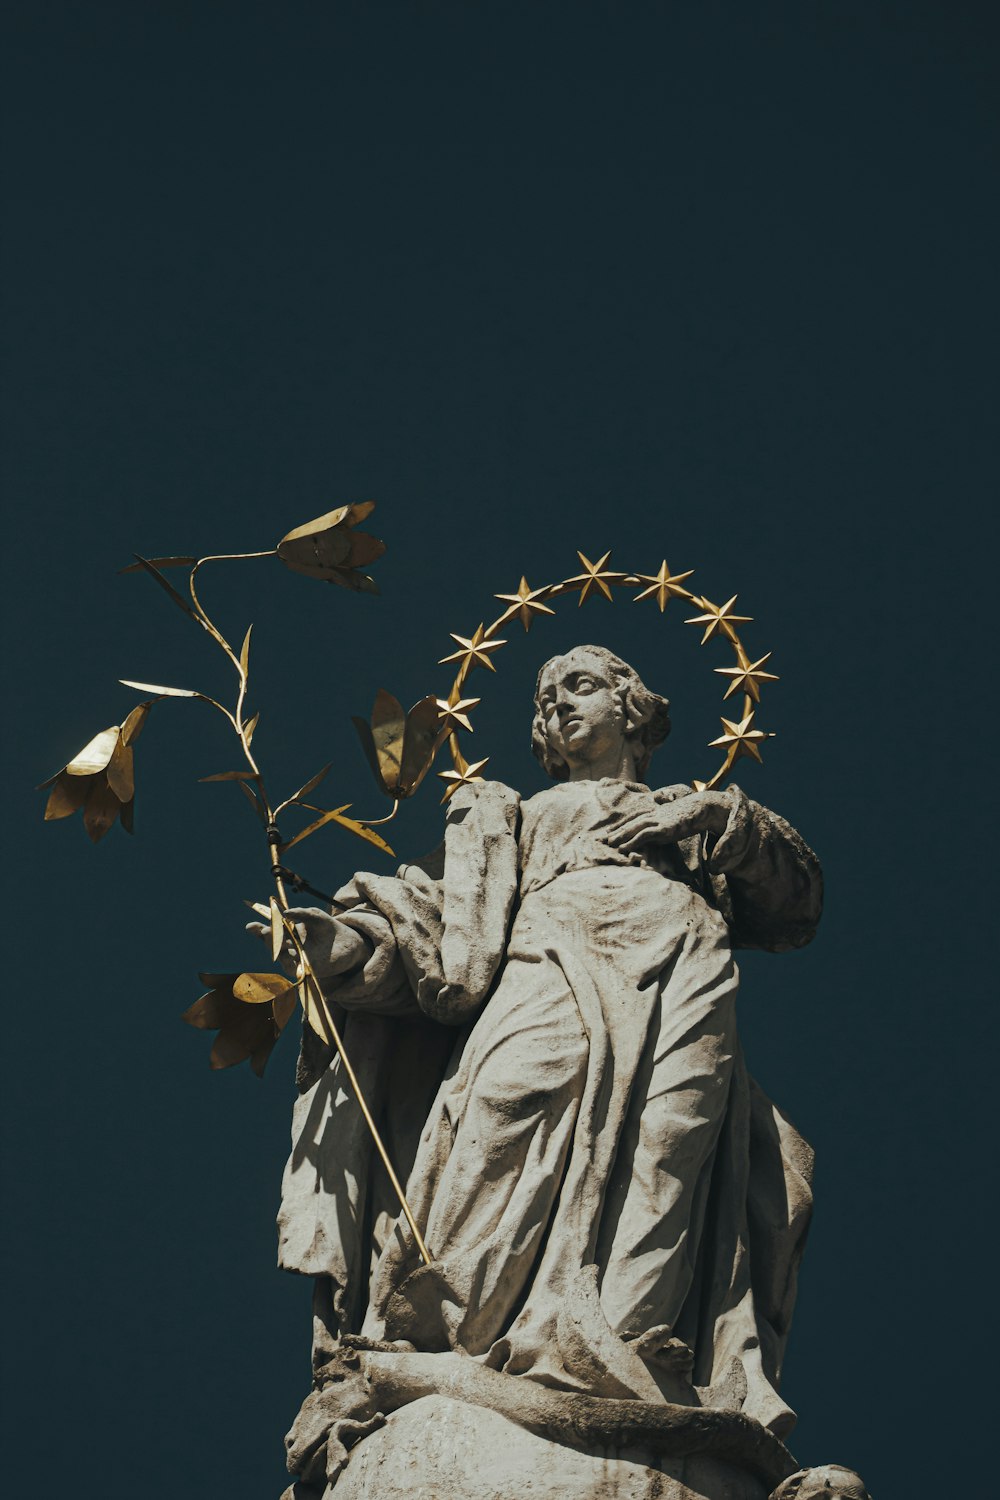 una estatua de una persona sosteniendo una estrella